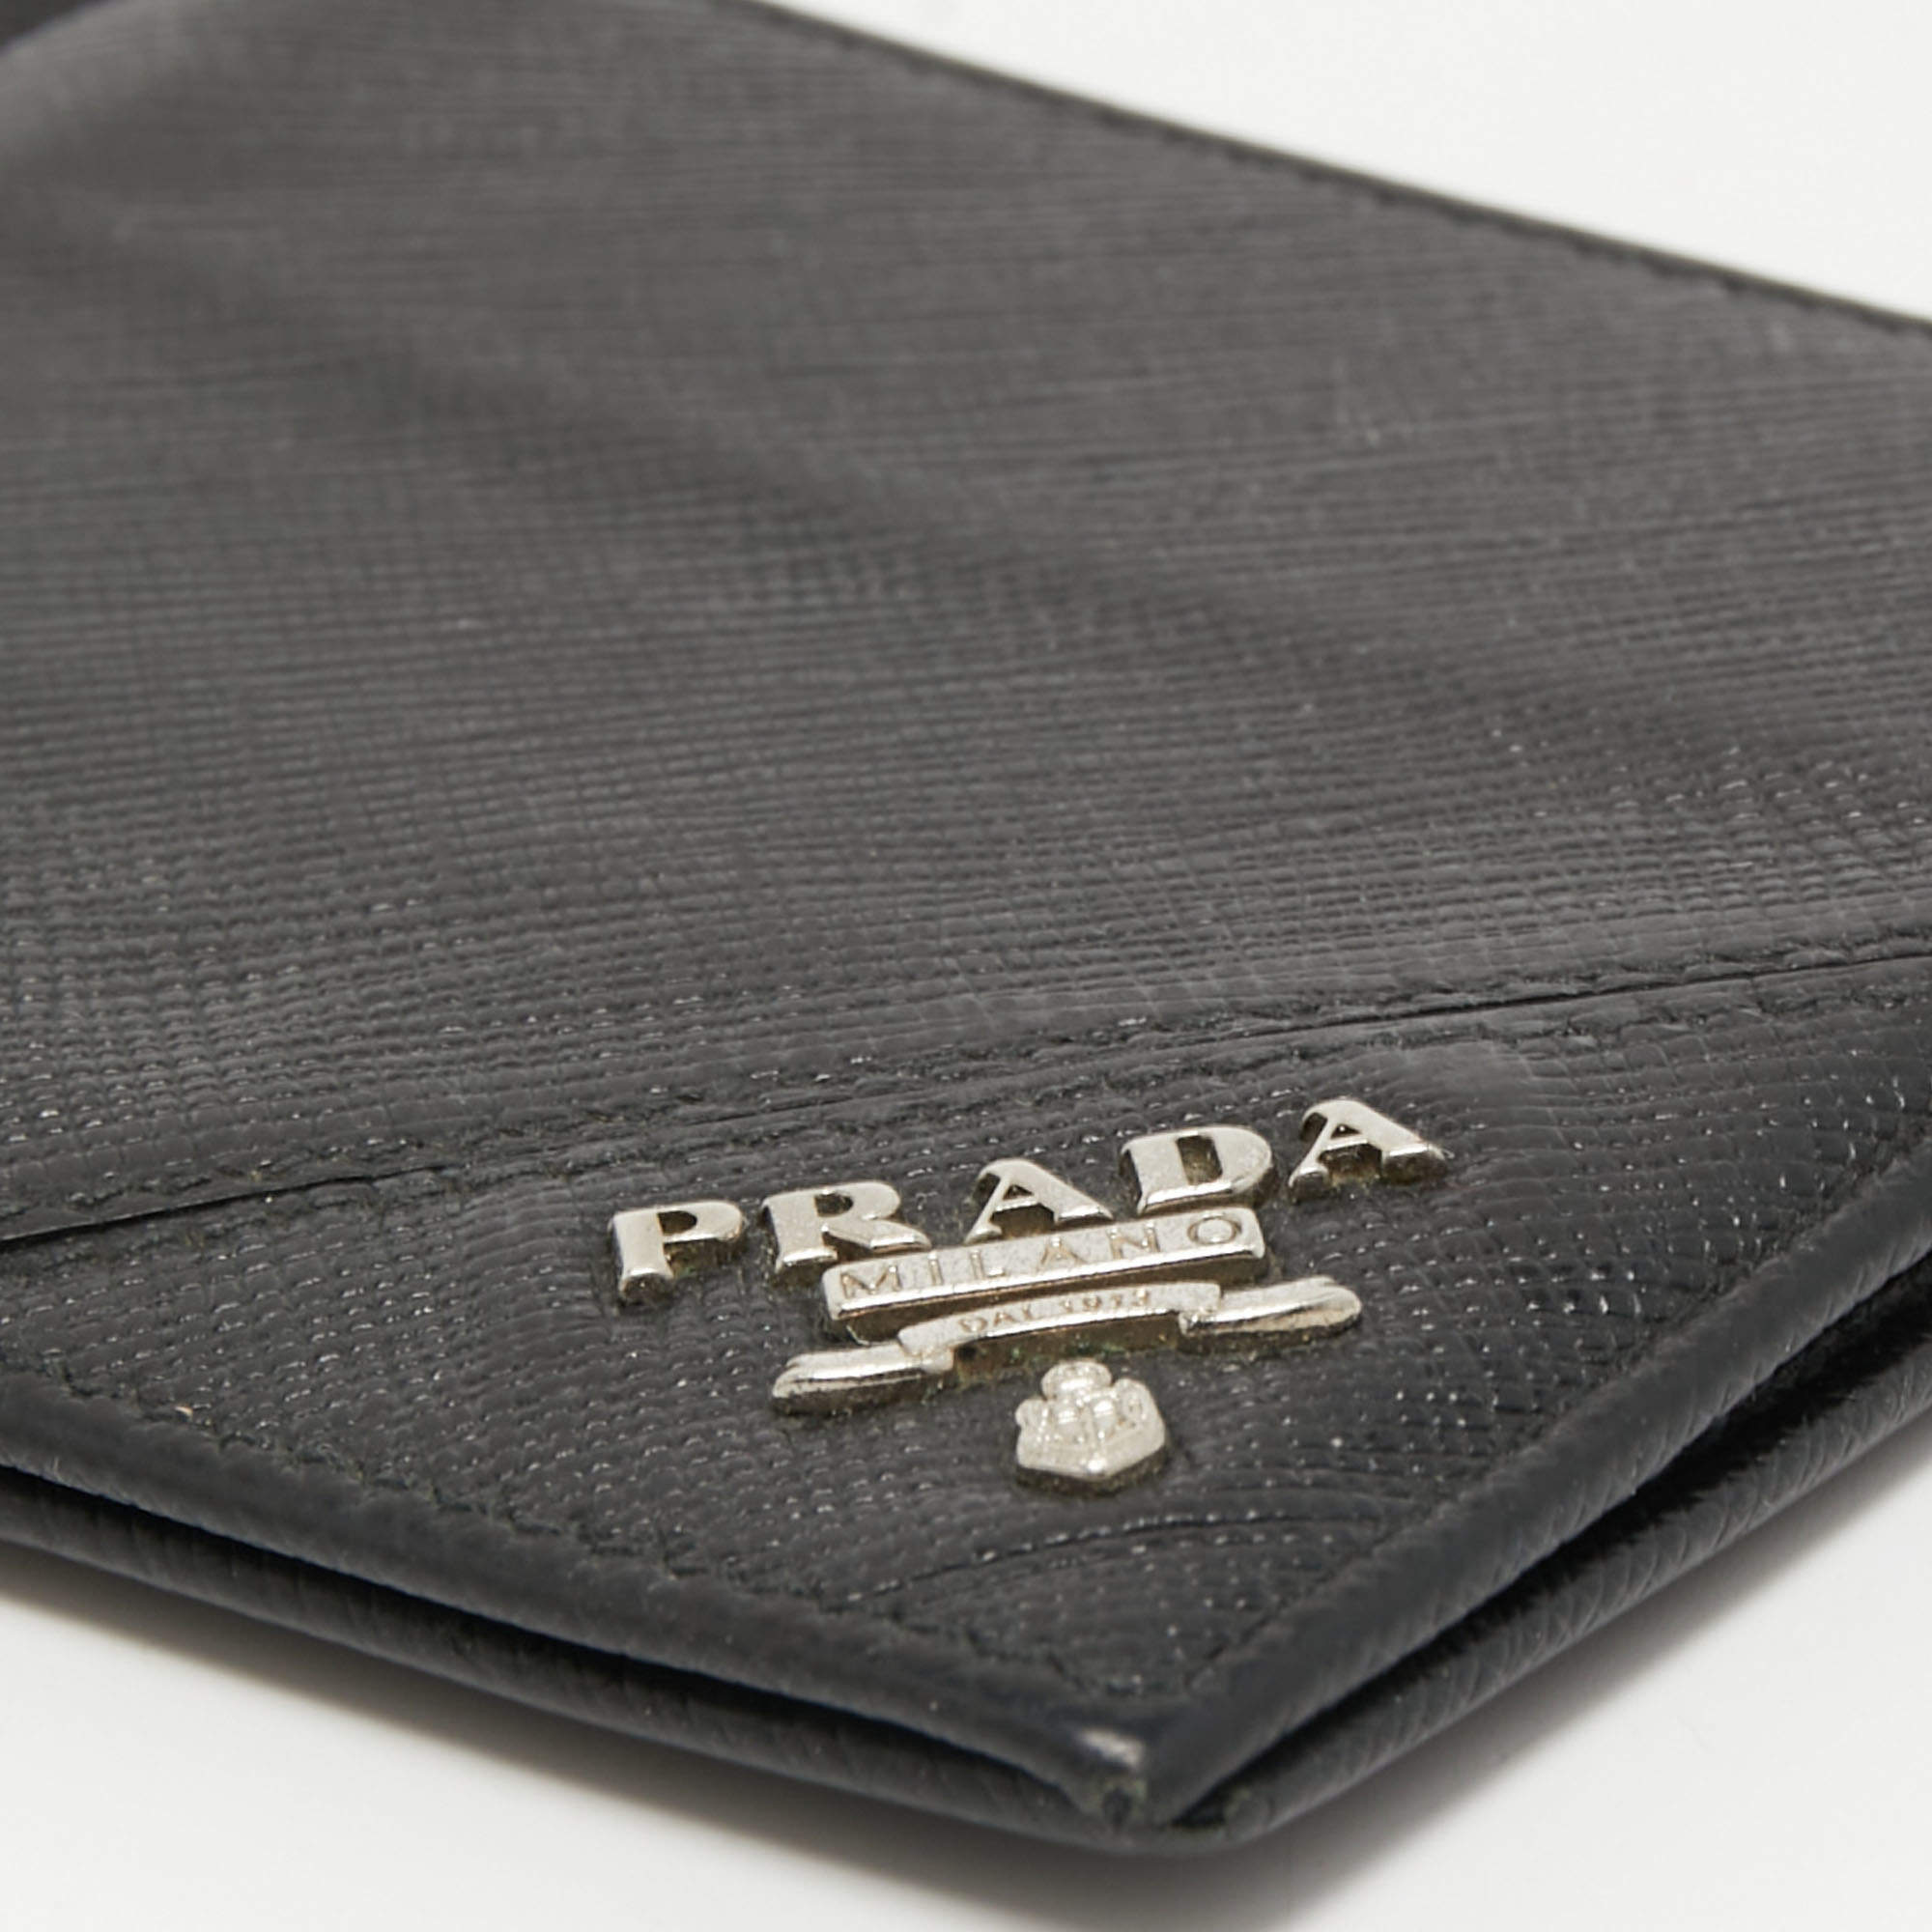 Prada Men's Saffiano Leather Money Clip Wallet